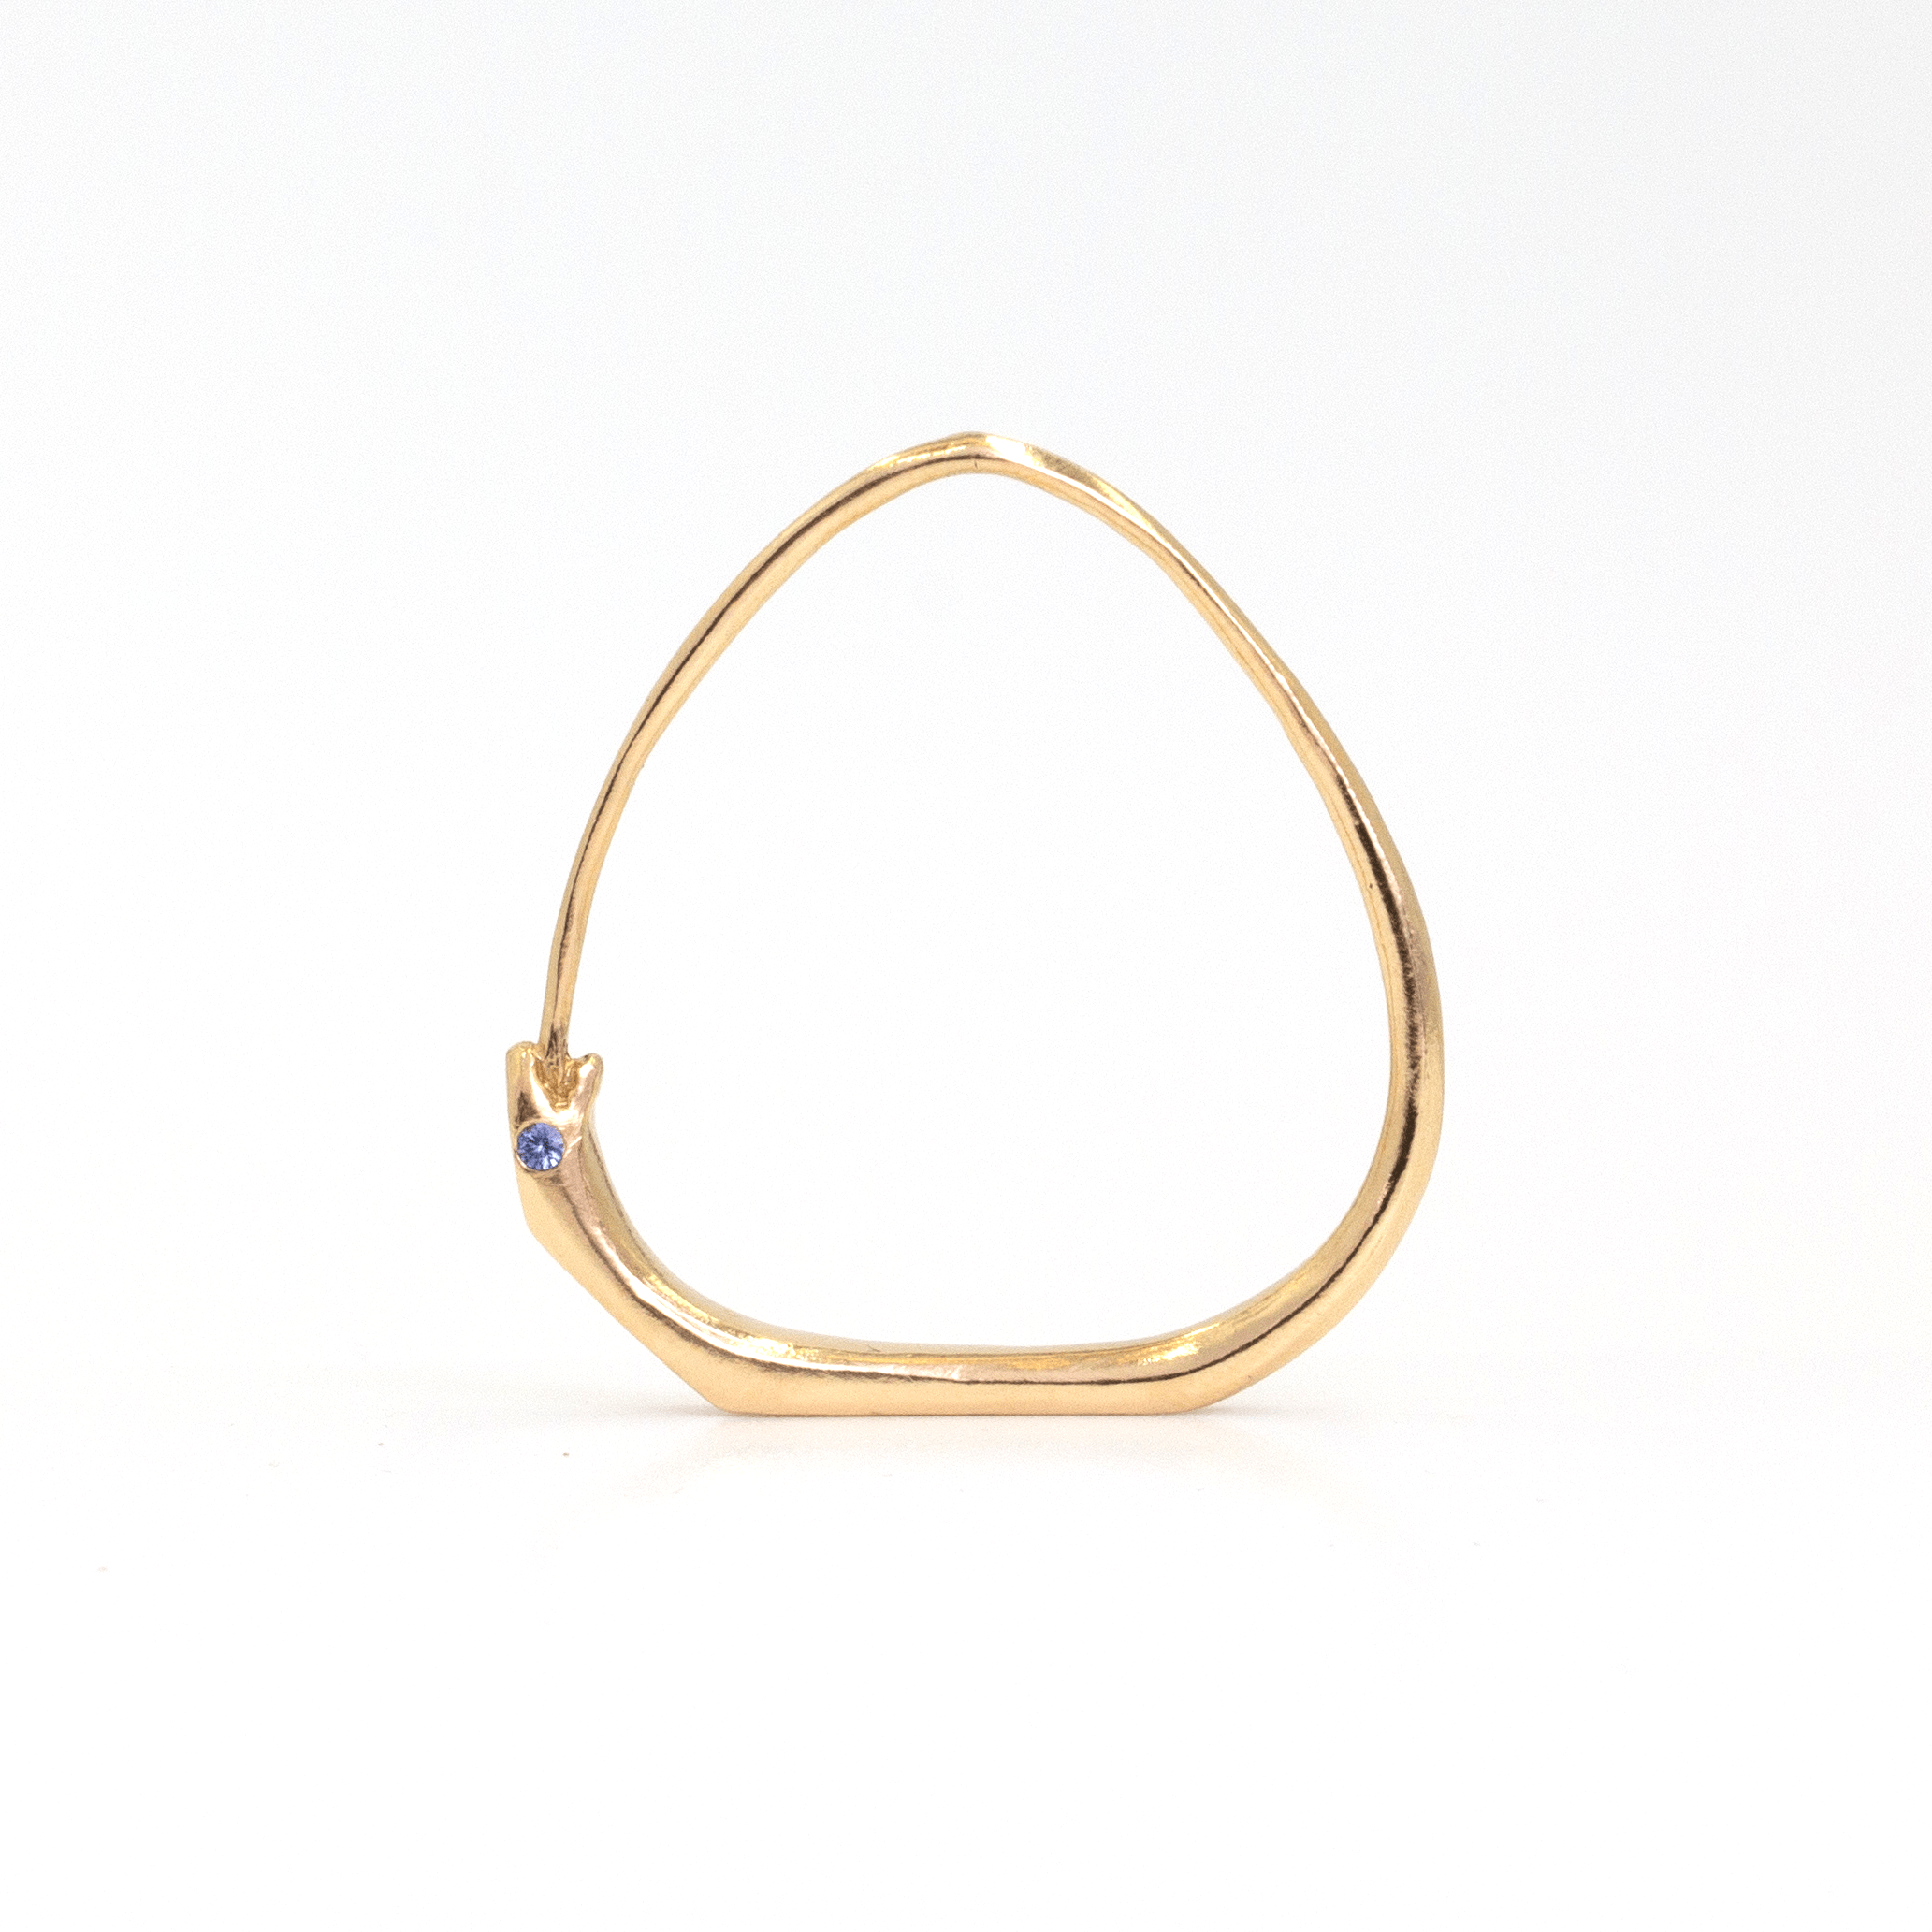 Fine Ouroboros Edit ouroboros pendant 14k yellow gold / blue sapphires / 16 inch chain The Cosmic Ouroboros Necklace